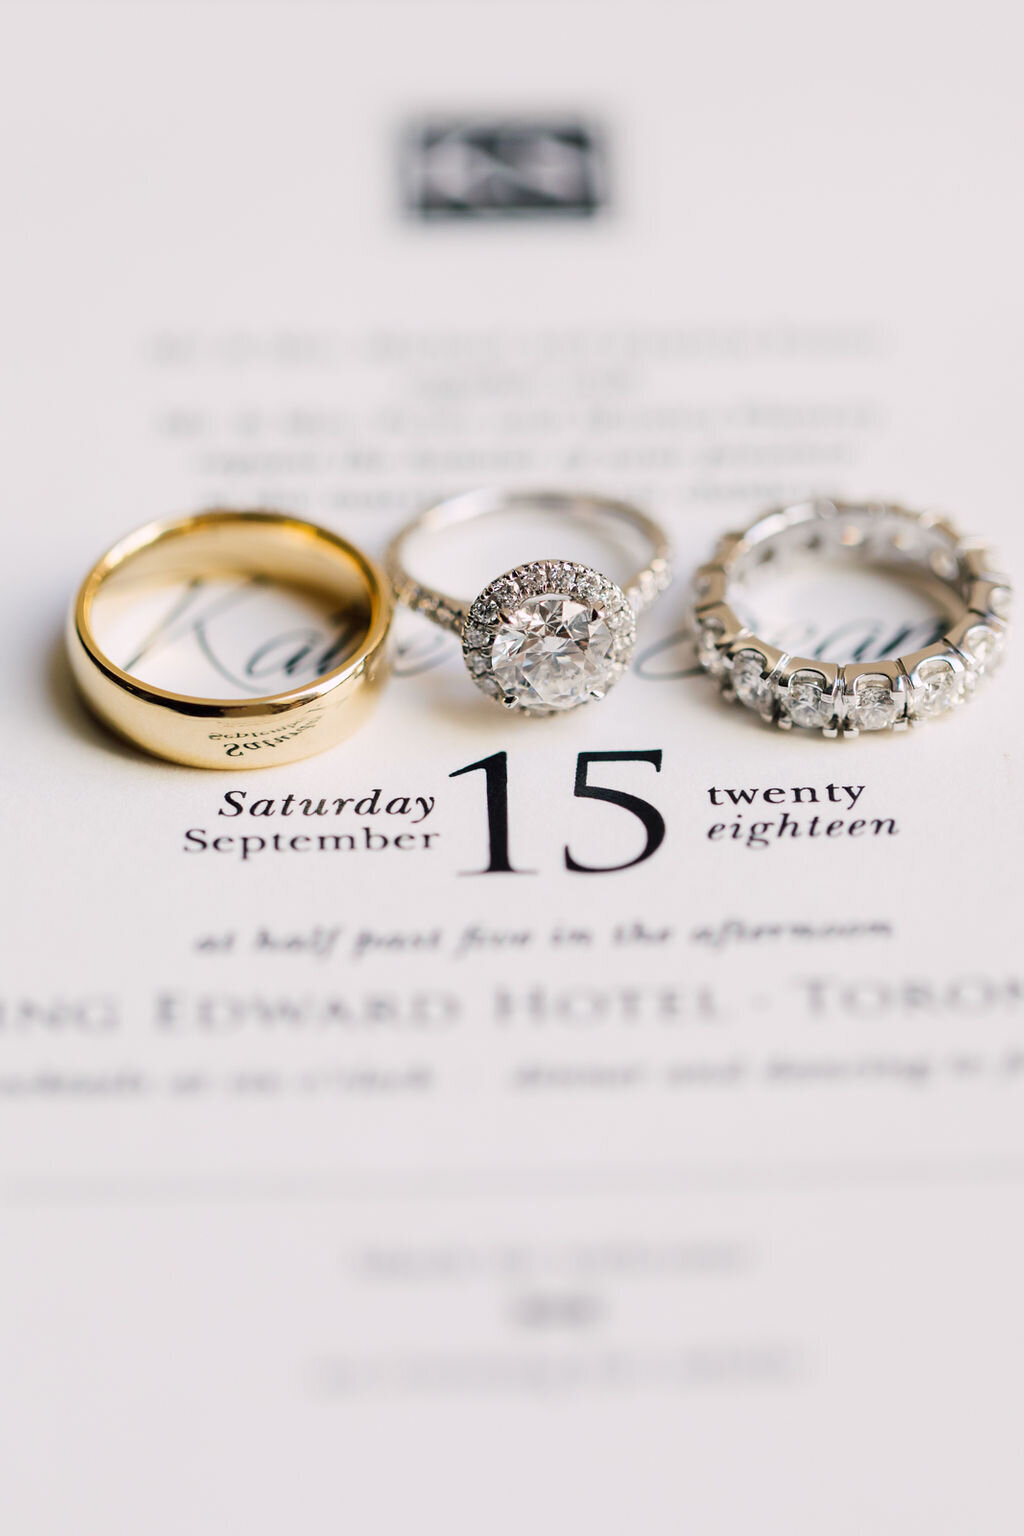 Twelfth Night Events | London, Ontario Wedding Planner10